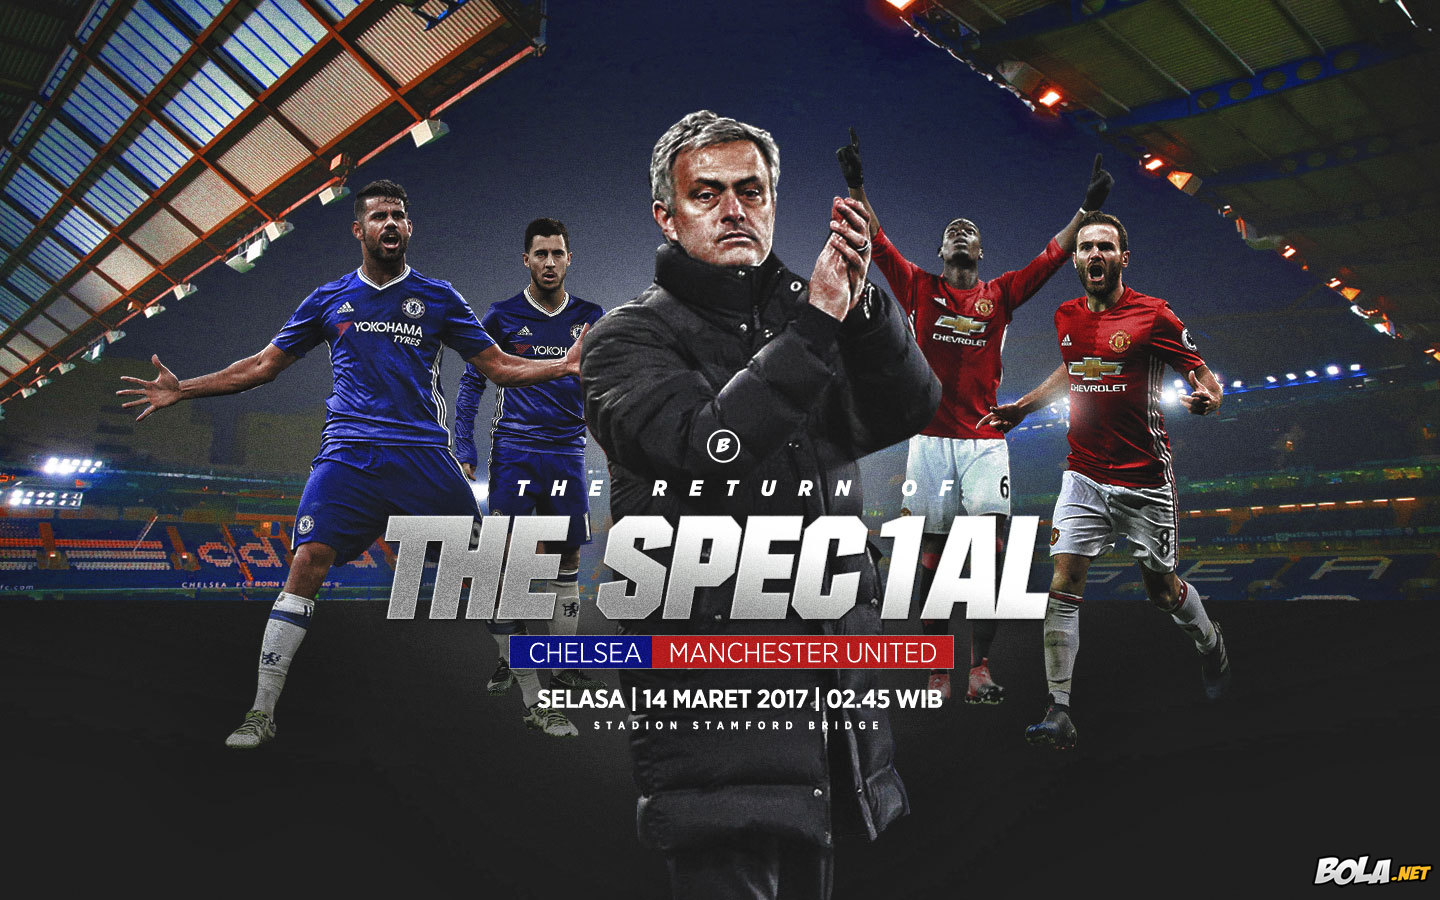 Deskripsi : Wallpaper Chelsea Vs Manchester United, size: 1440x900